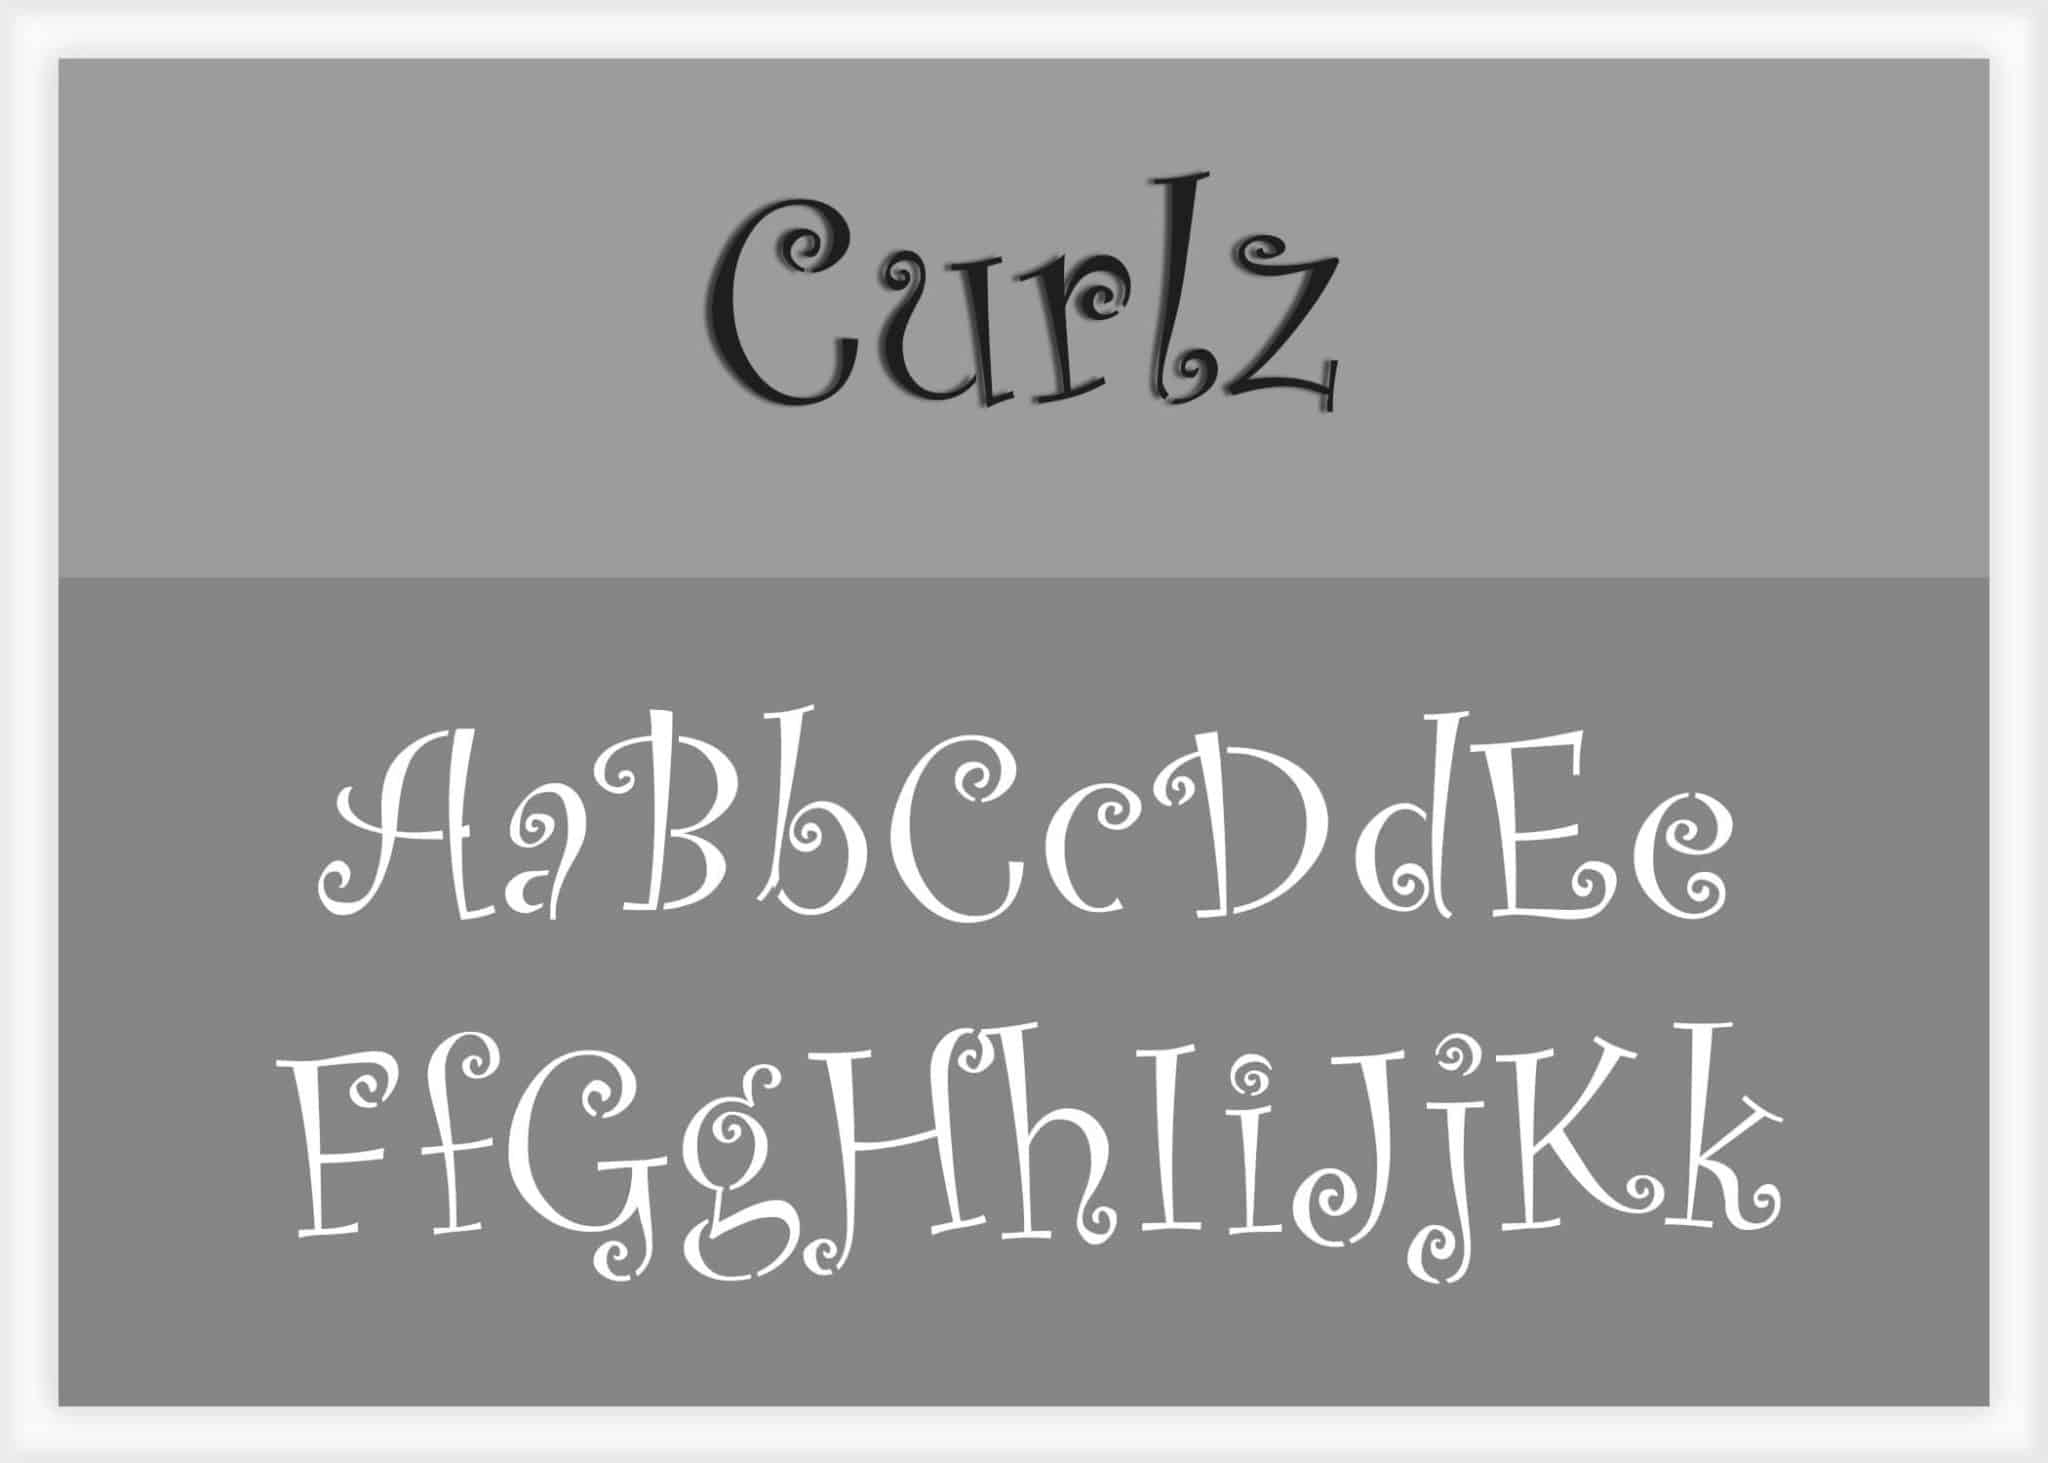 AL-UCZ Curlz - Alphabet Stencil Uppercase - iStencils